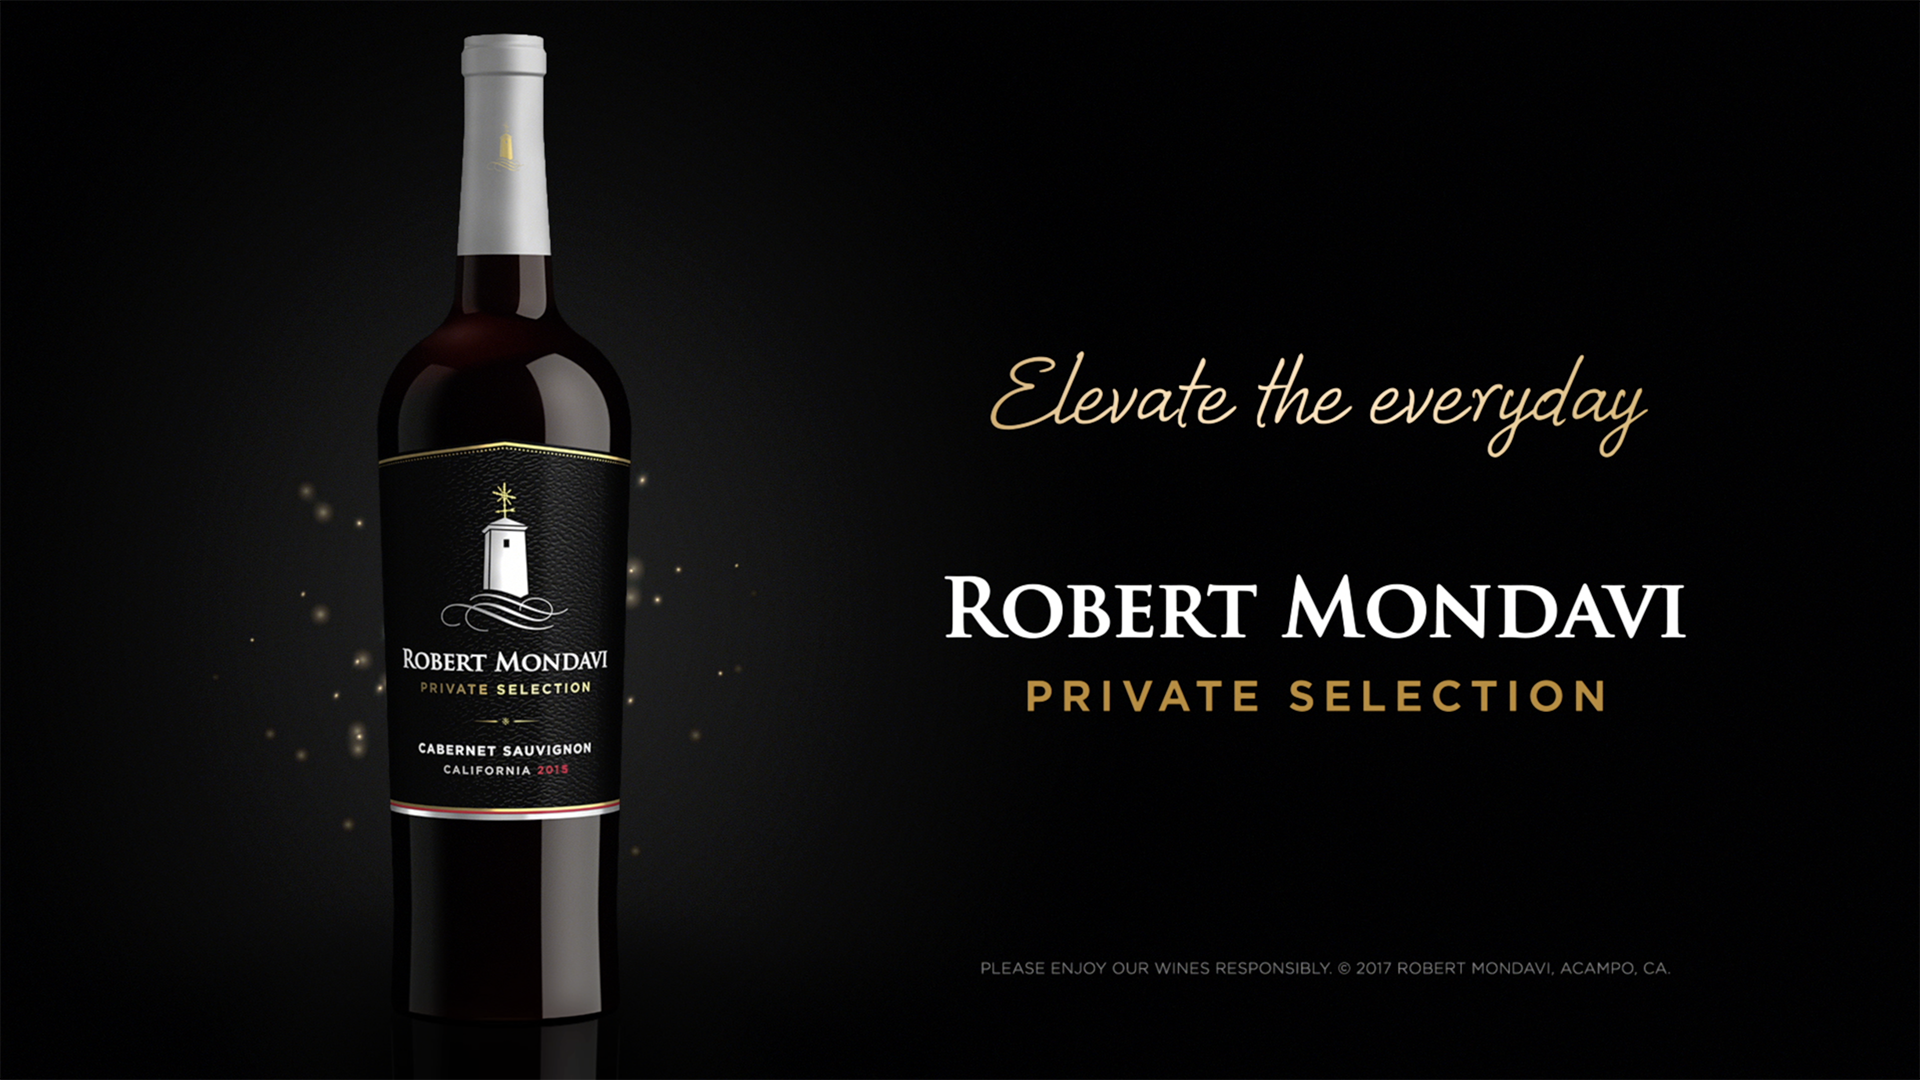 Robert Mondavi Private Selection